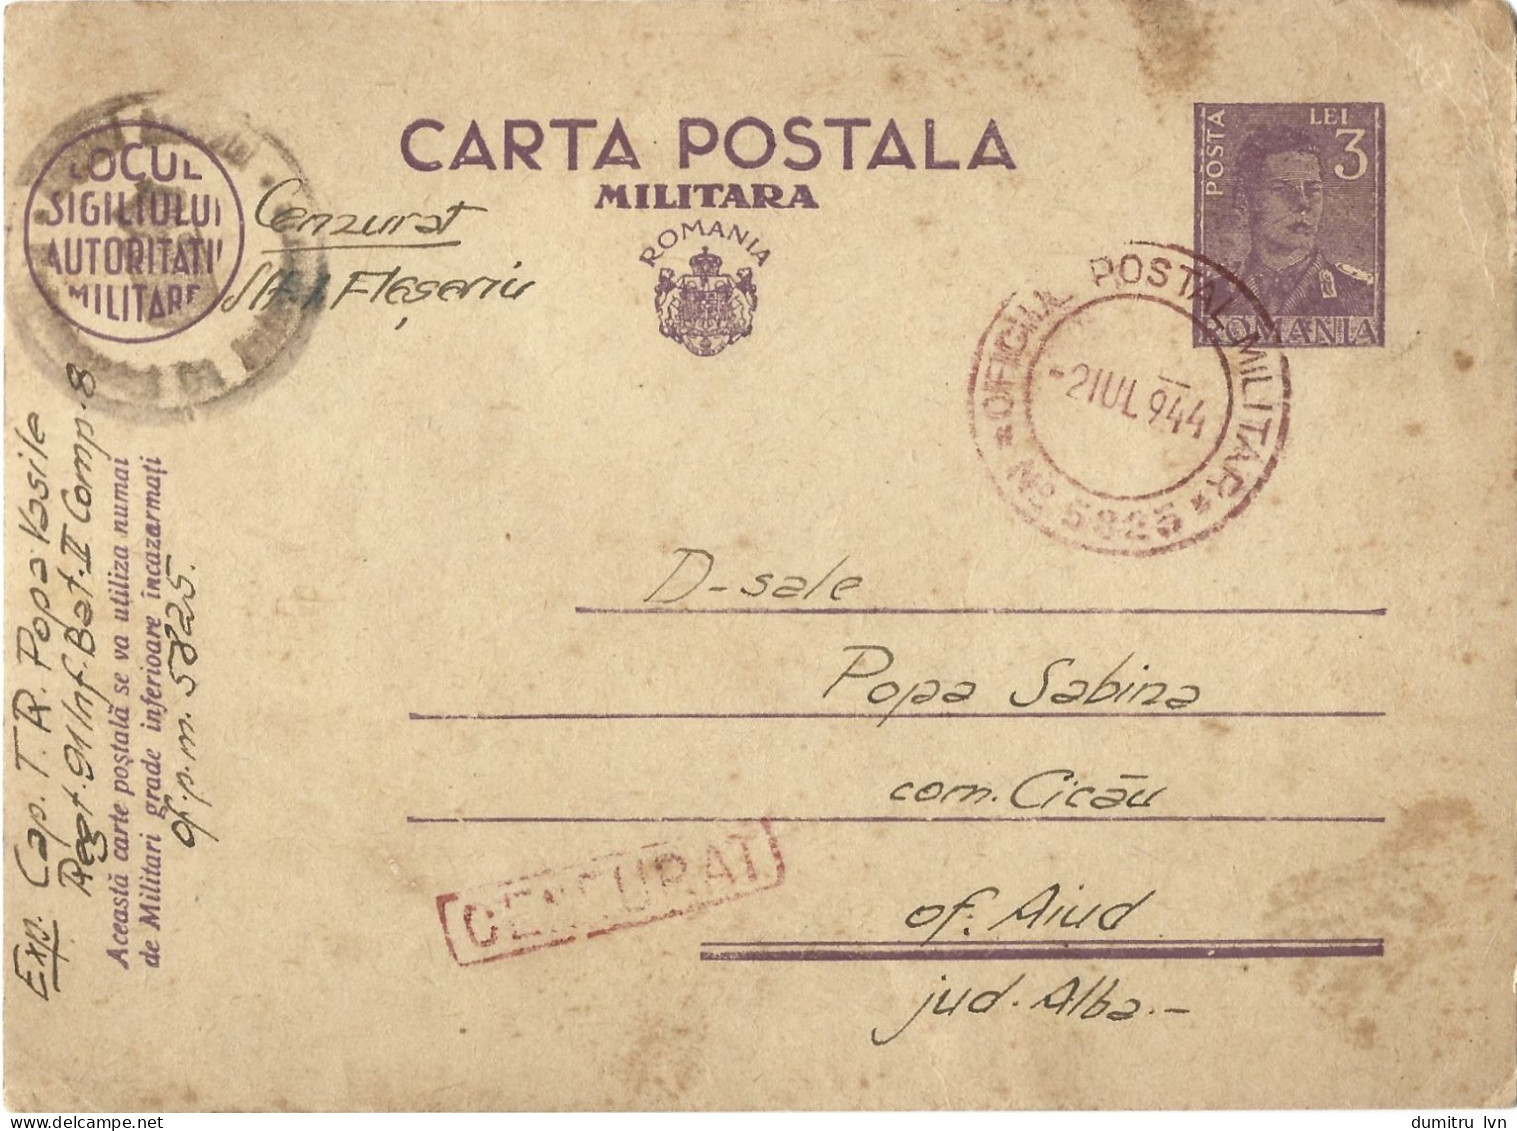 ROMANIA 1944 MILITARY POSTCARD, MILITARY CENSORED, OPM 5825, POSTCARD STATIONERY - Cartas De La Segunda Guerra Mundial